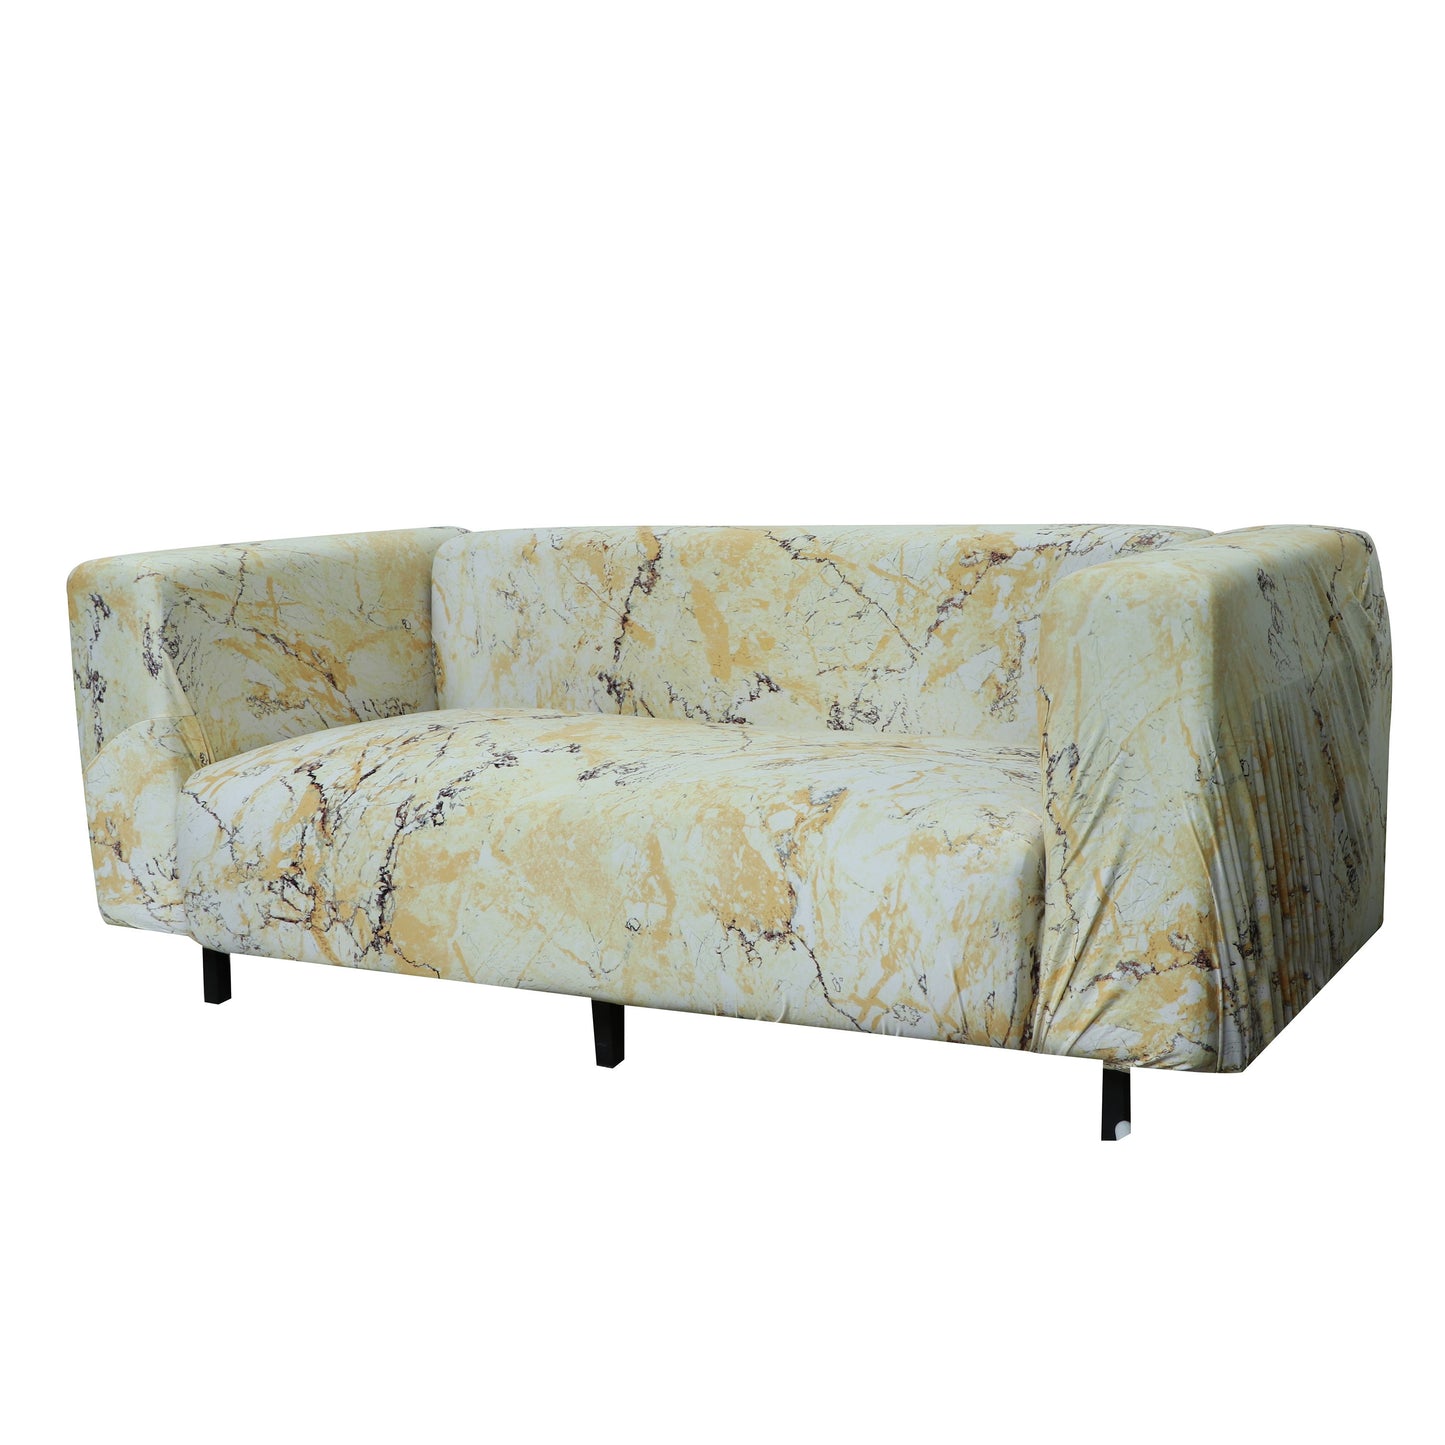 Printed Sofa Slipcover - Marble Yellow